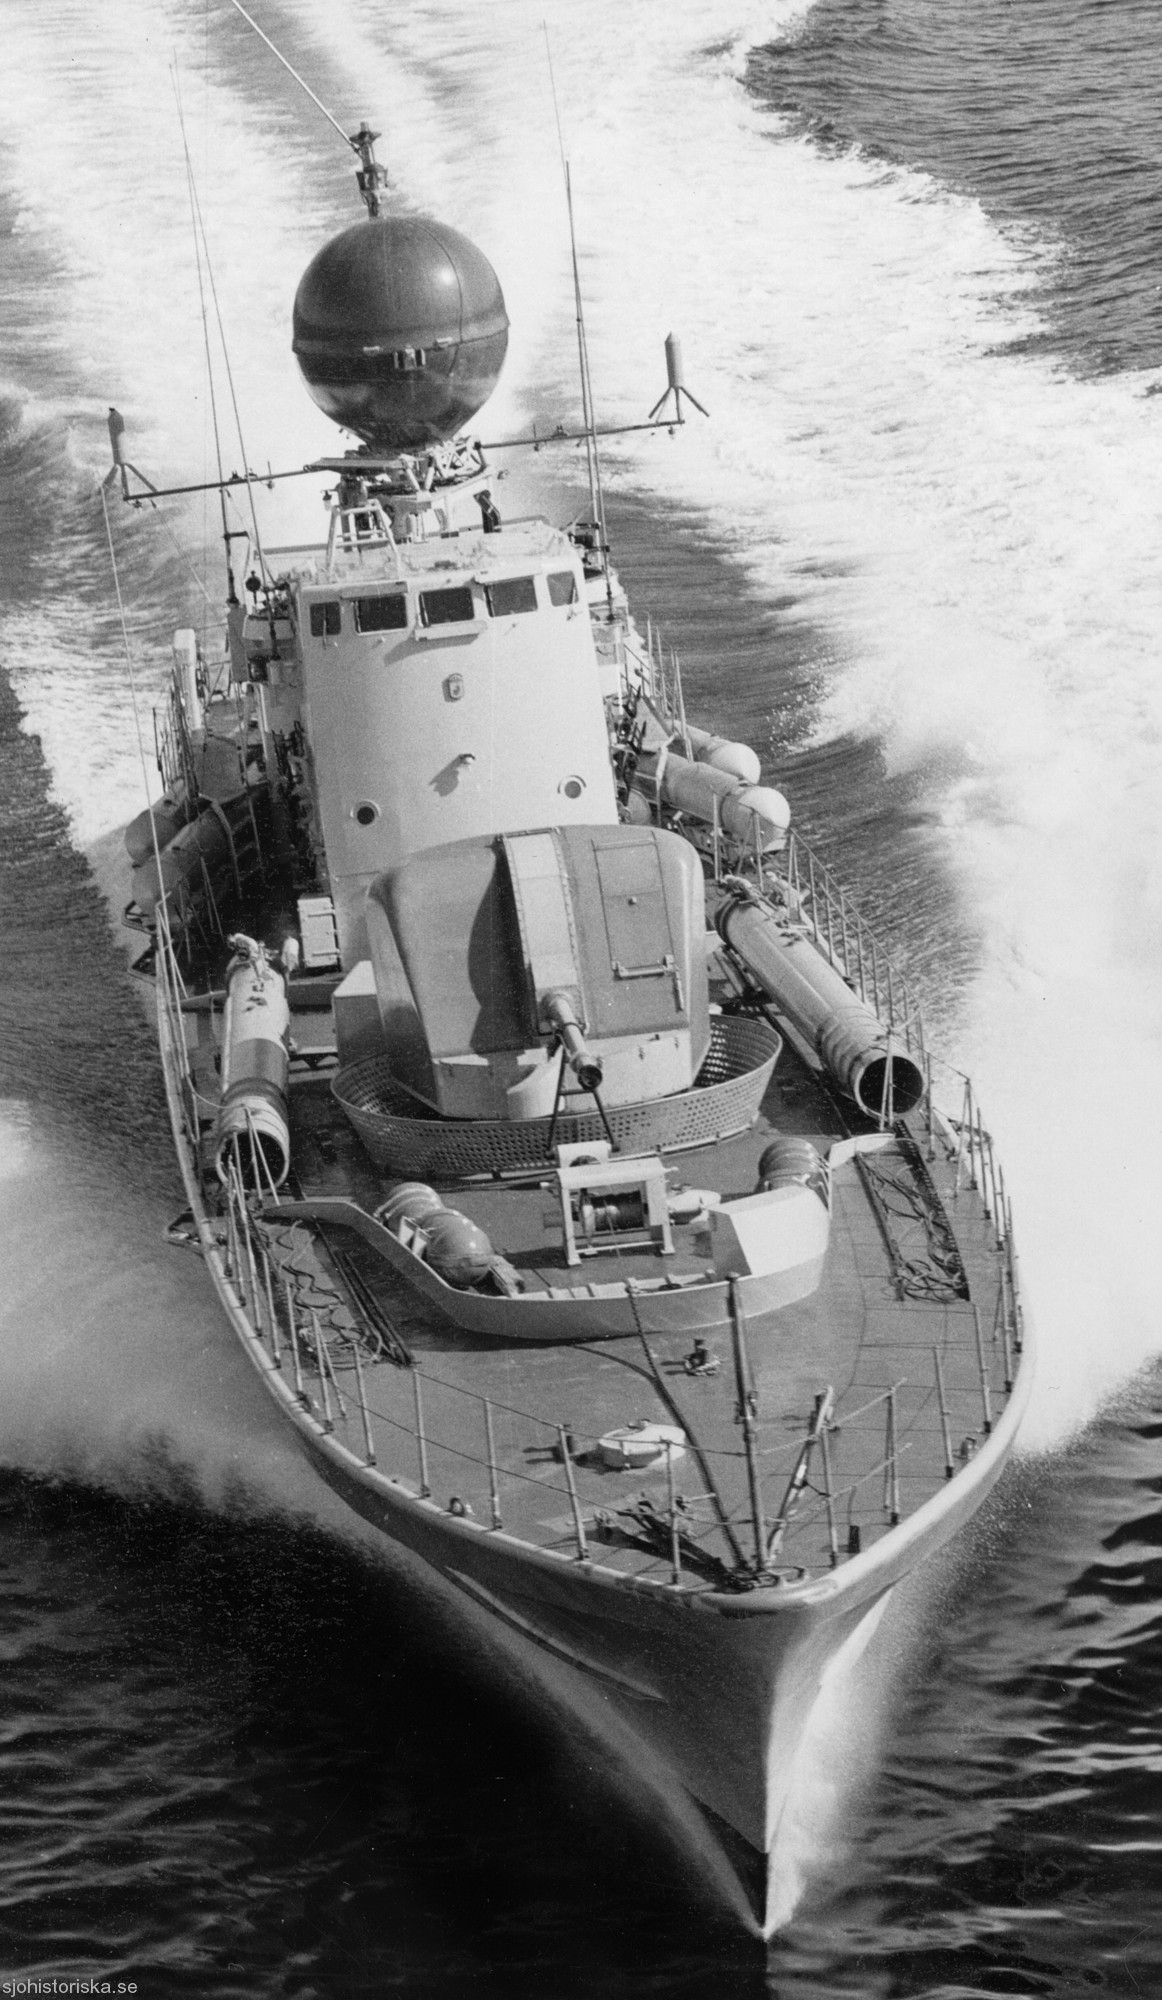 t121 spica hswms hms class fast attack craft torpedo boat vessel swedish navy svenska marinen 07